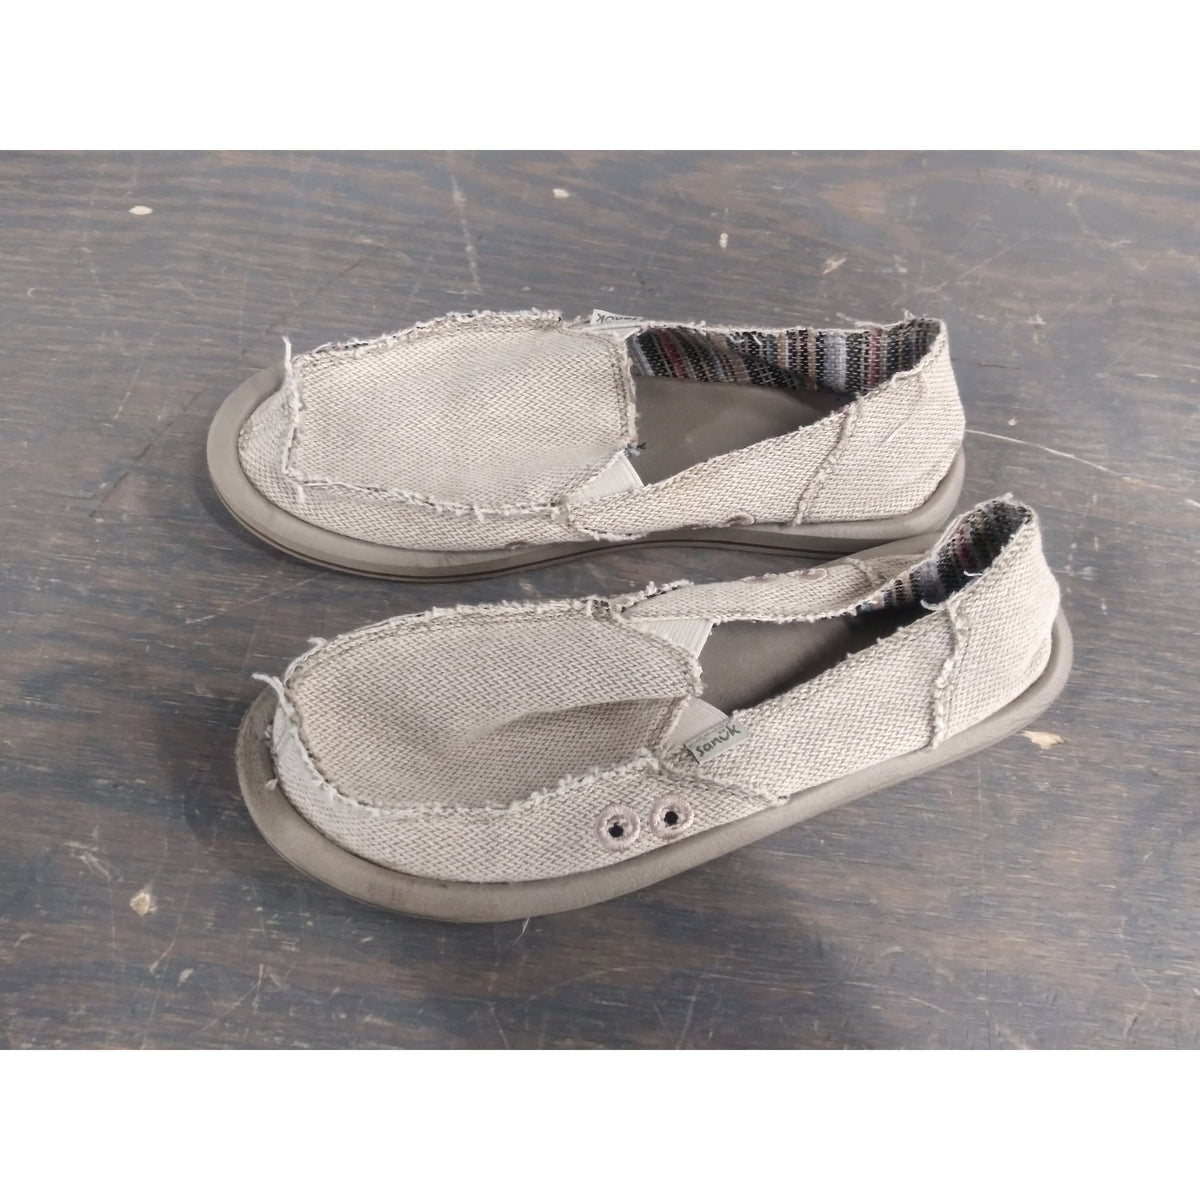 Sanuk Donna Hemp Women's Shoe-Natural-7 - Used - Acceptable